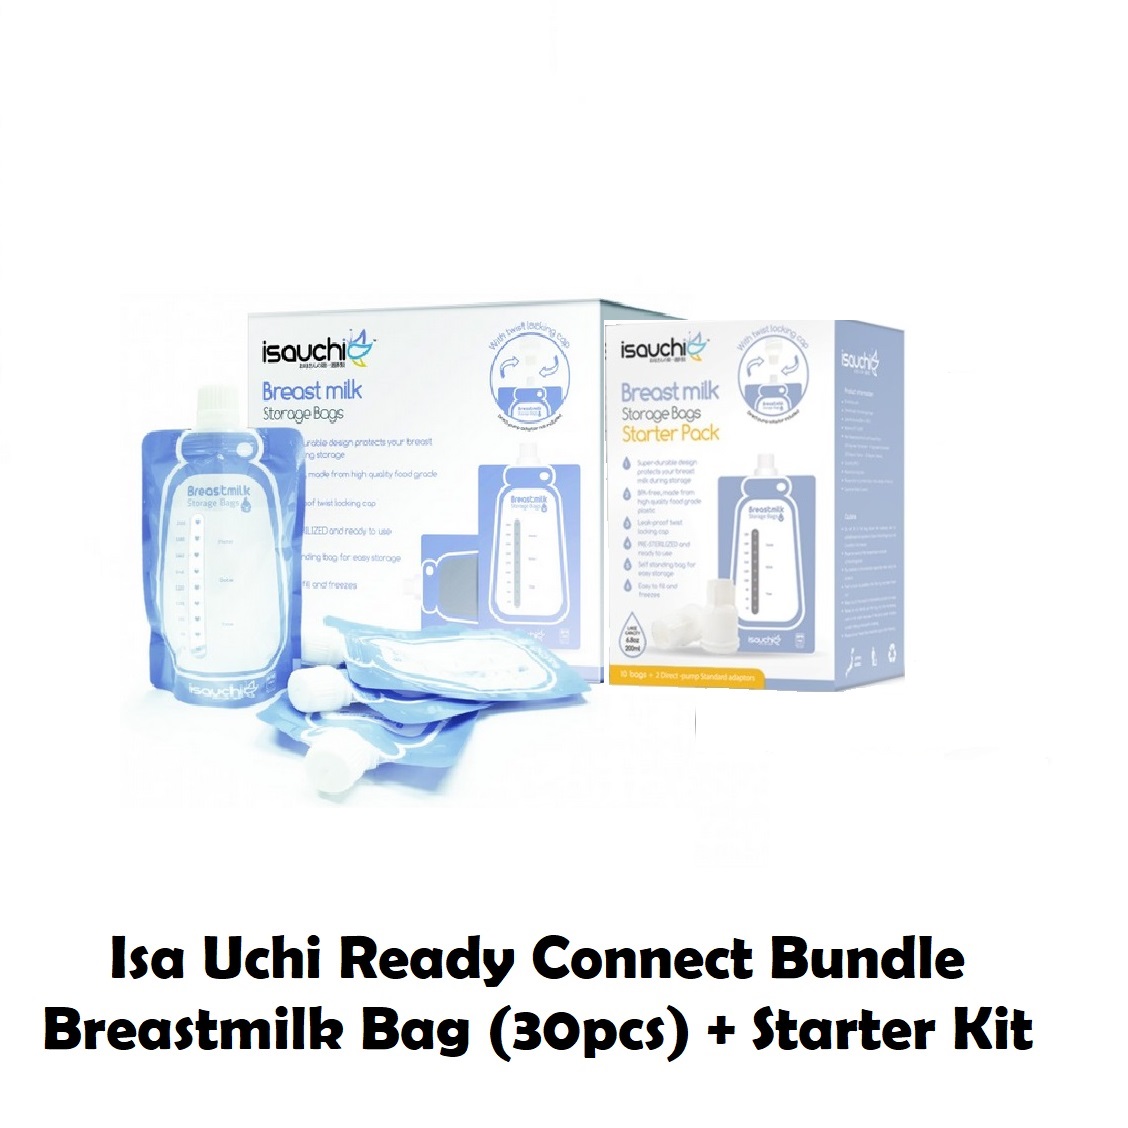 Isa Uchi Ready Connect Breastmilk Bag (30pcs) + Starter Pack Bundle